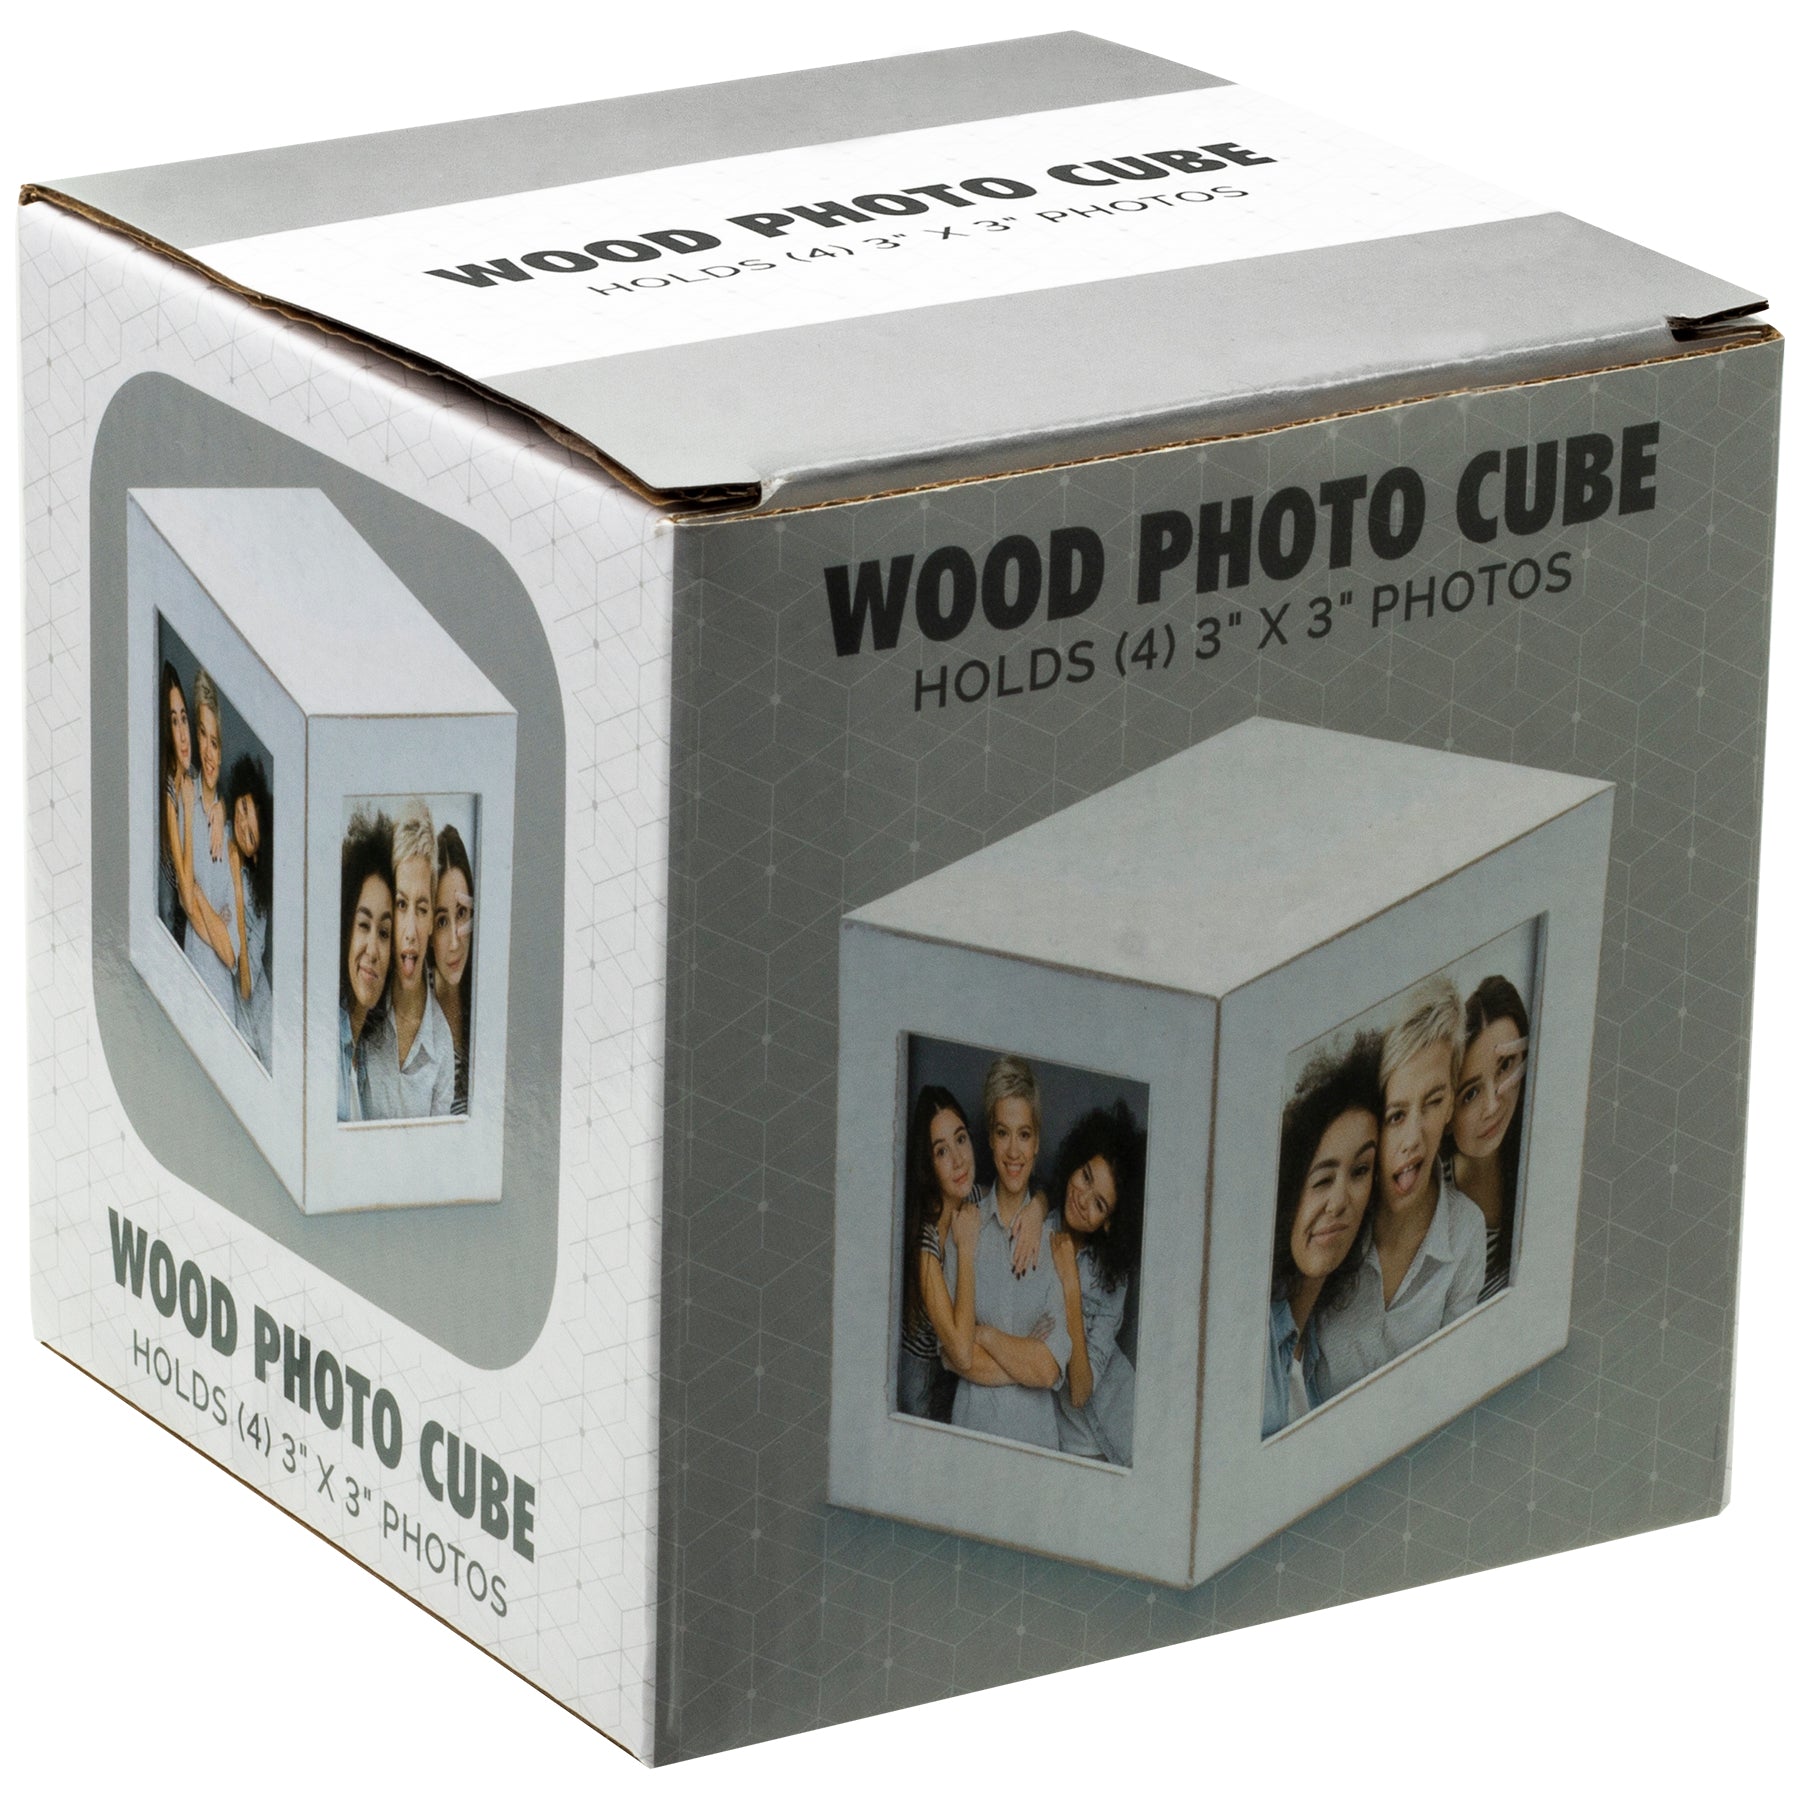 Wood Photo Cube